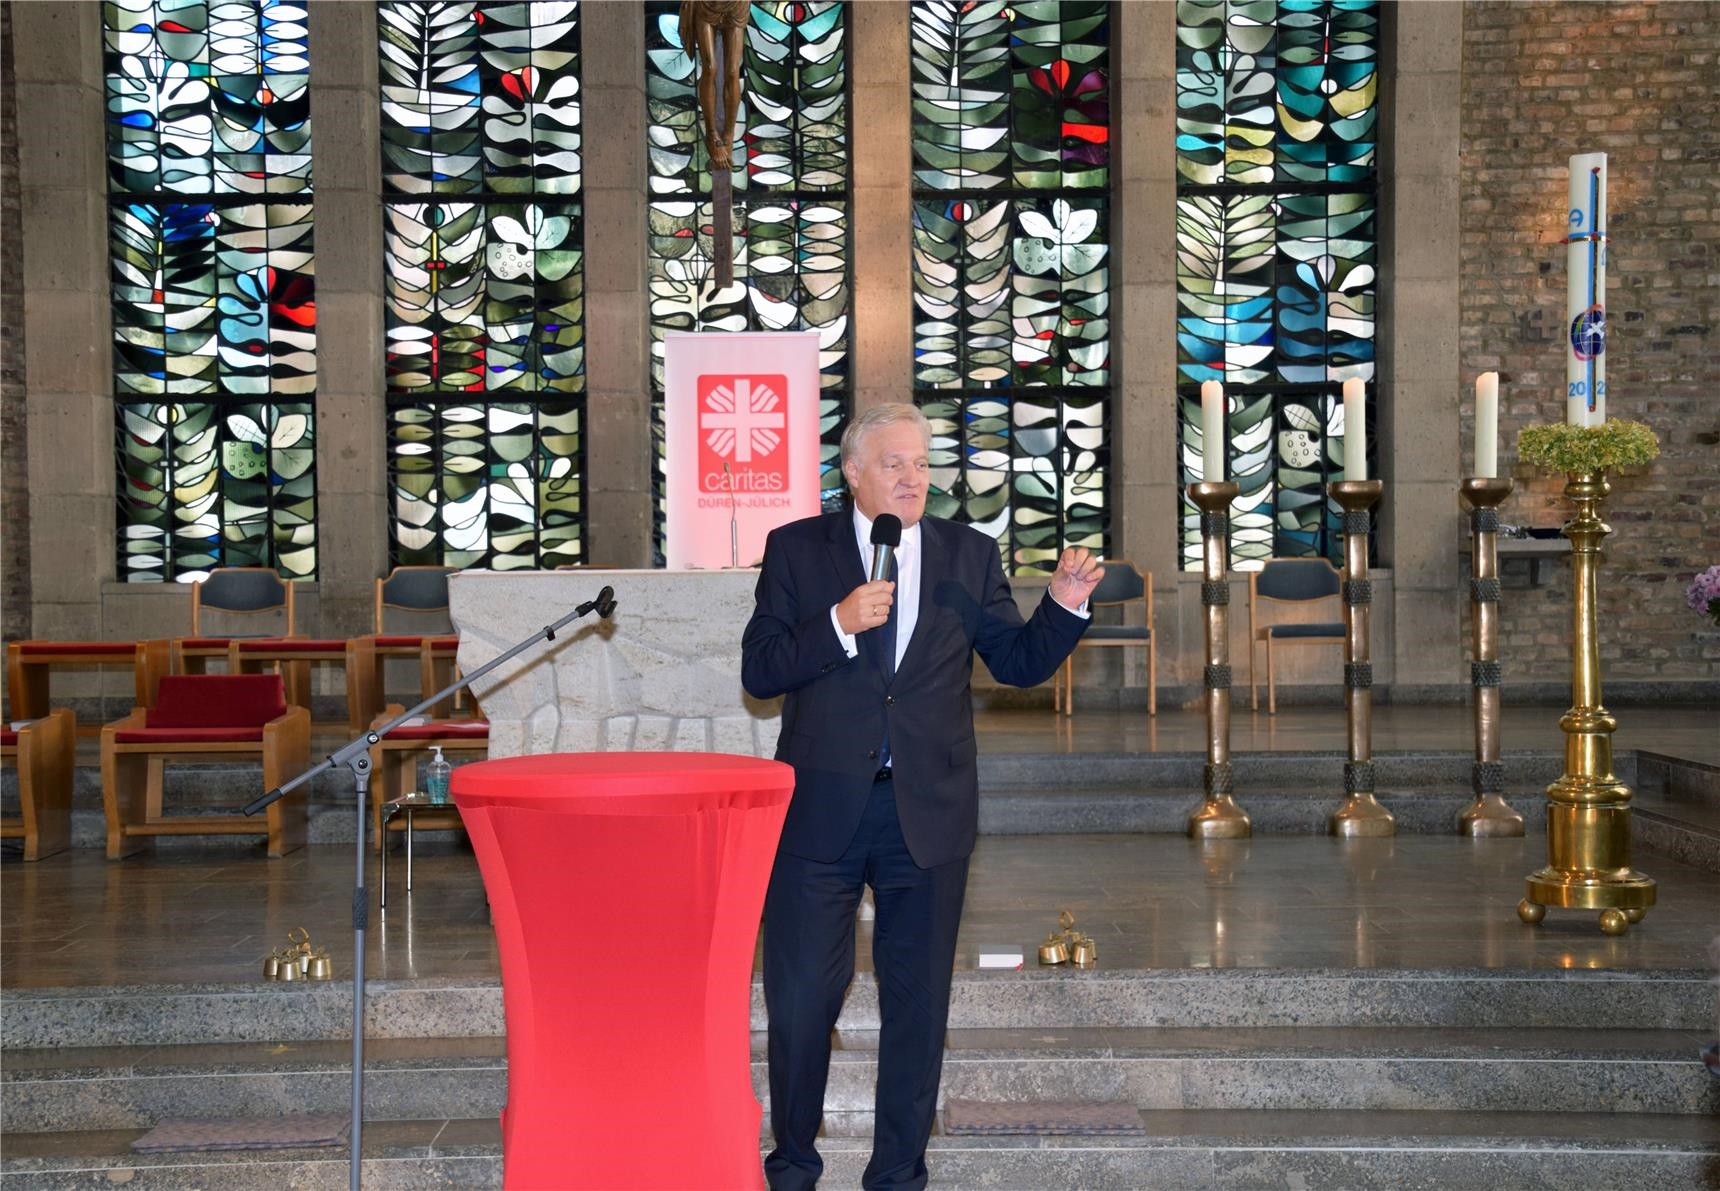 Mann hält eine Rede zum Caritas-Jubiläum in der Kirche St. Marien in Düren (Caritasverband Düren-Jülich / Erik Lehwald)